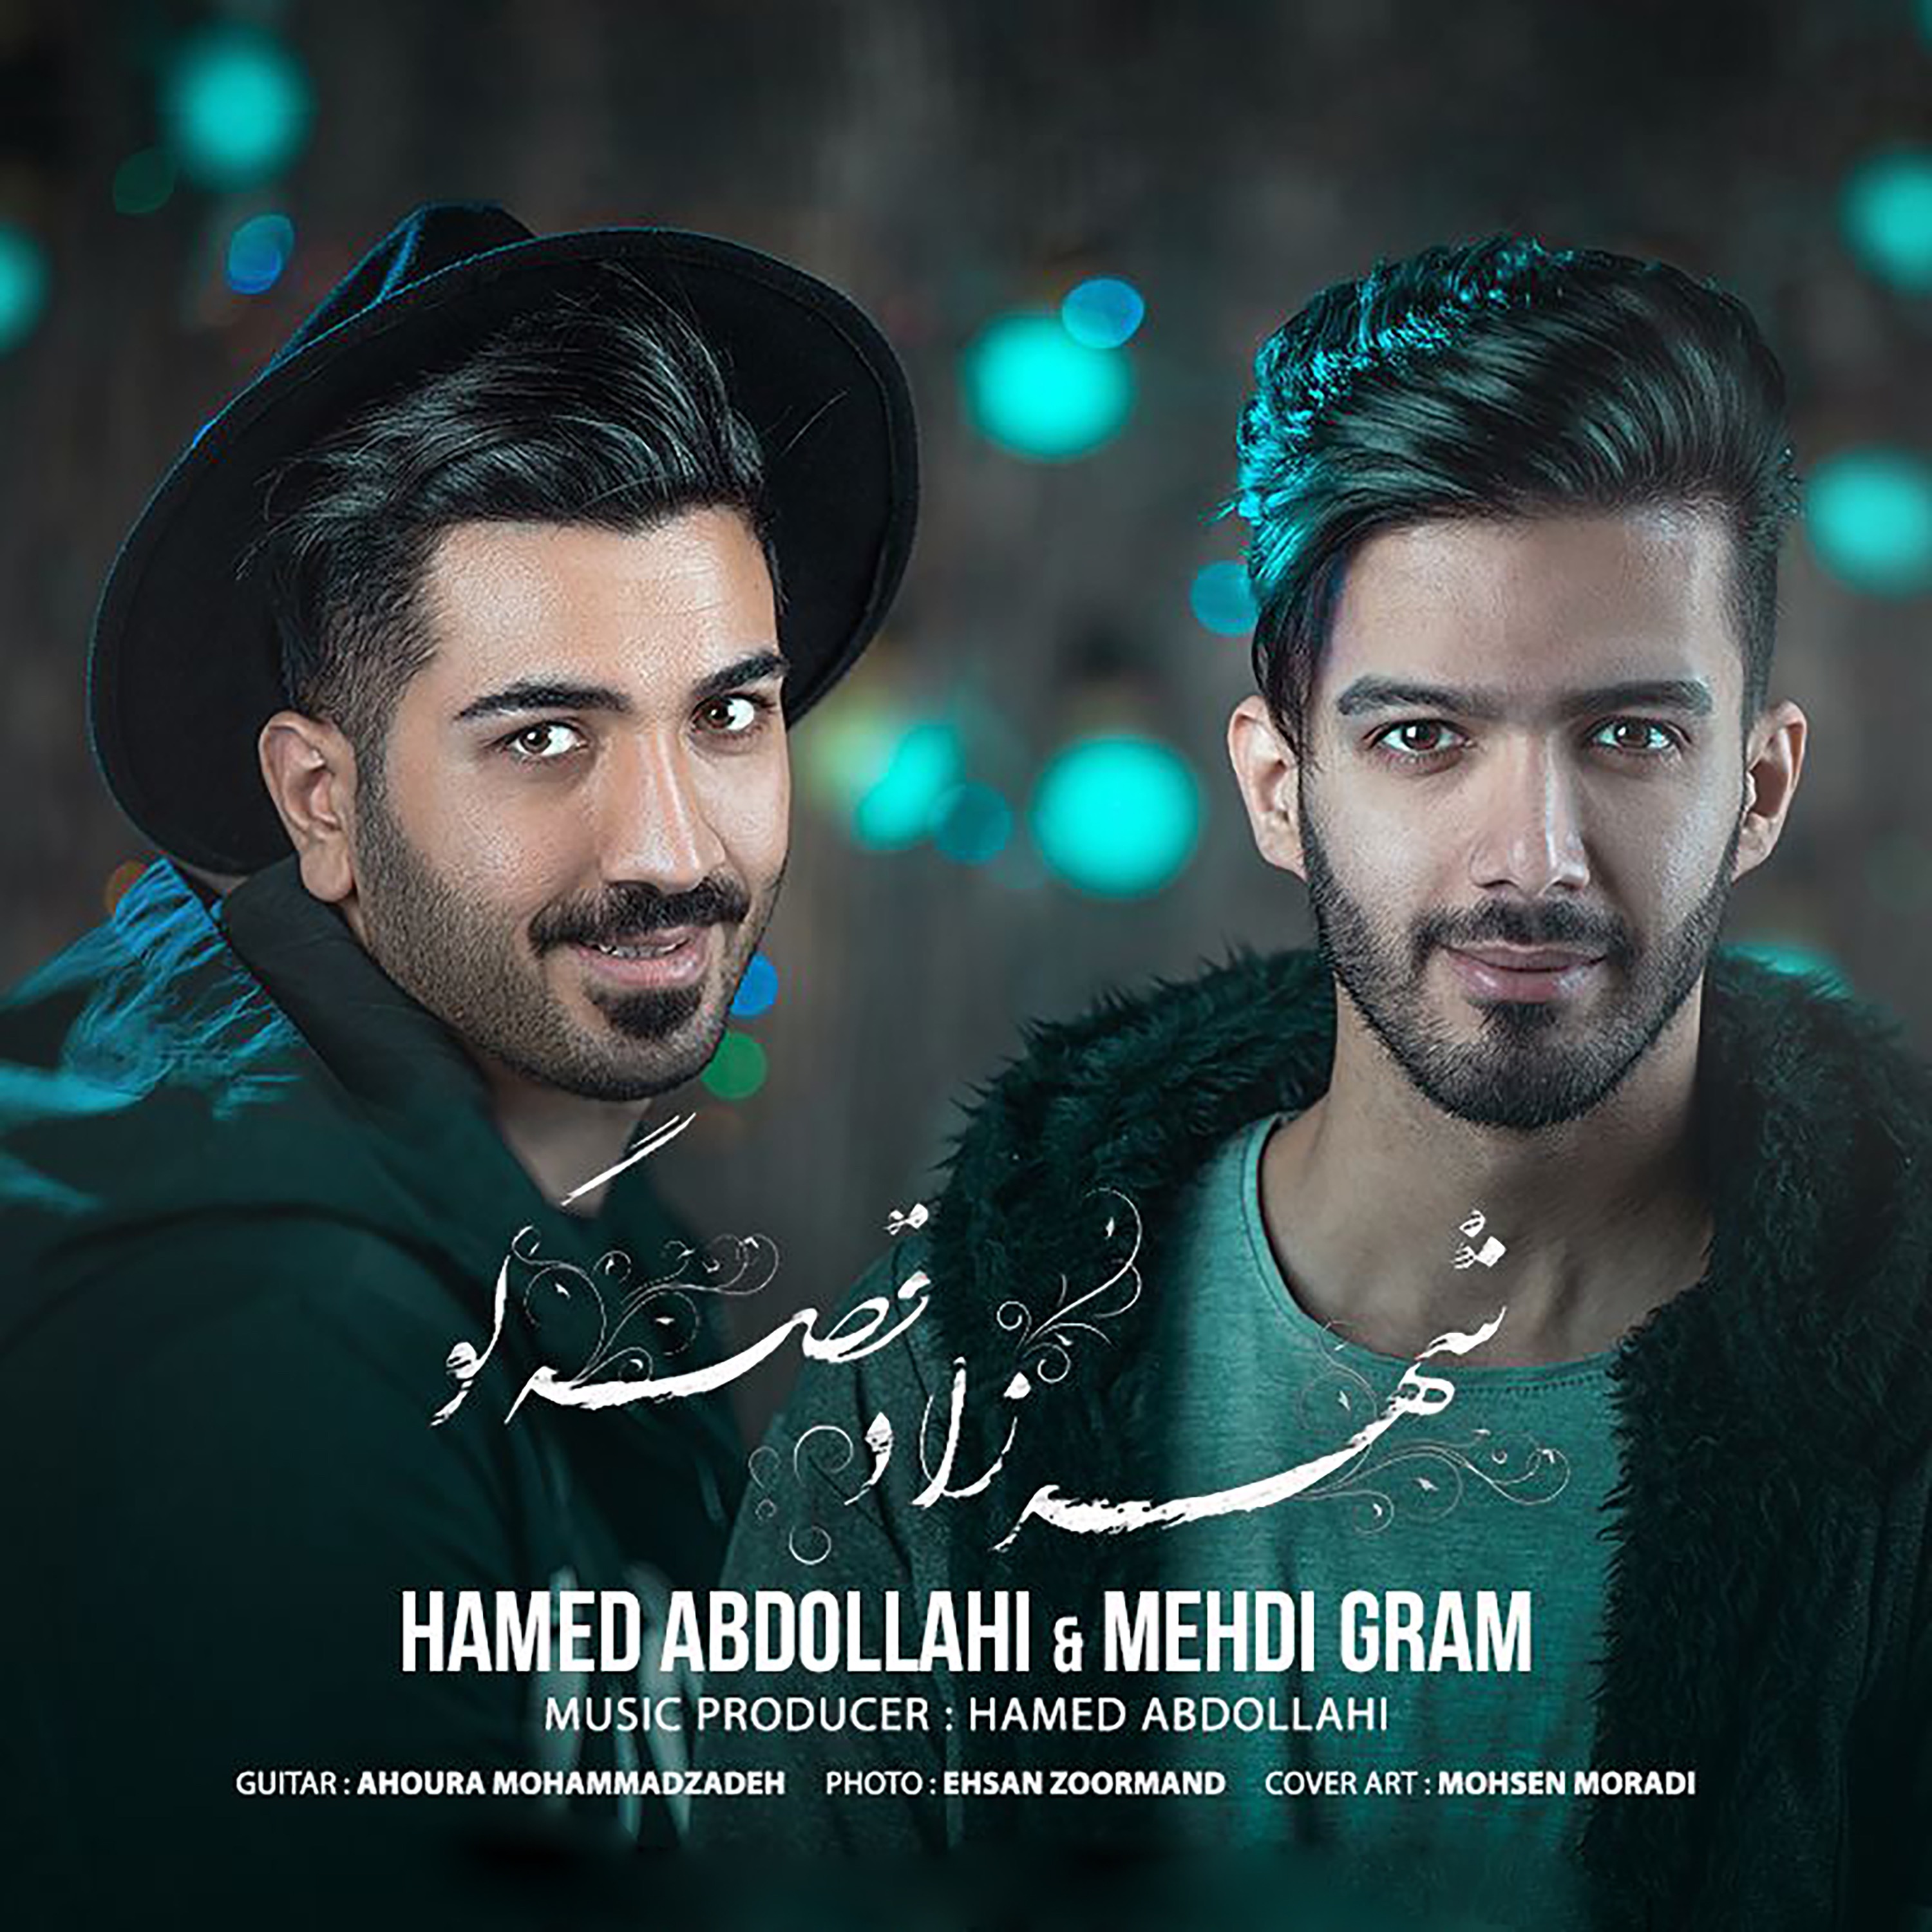  دانلود آهنگ جدید حامد عبداللهی و مهدی گرام - شهرزاد قصه گو | Download New Music By Hamed Abdollahi & Mehdi Gram - Shahrzade Ghesego